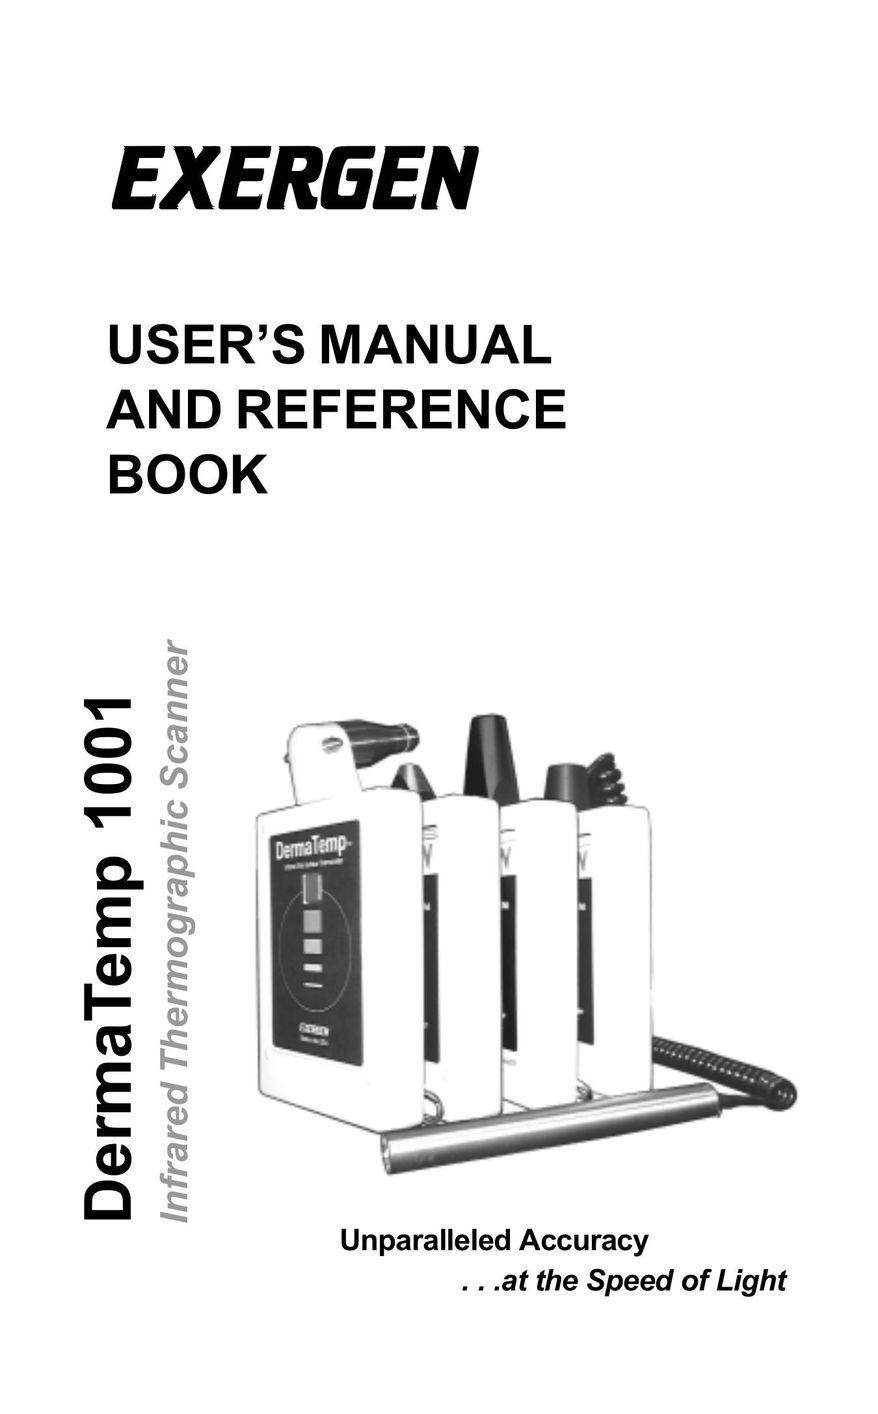 Exergen DT 1001 Scanner User Manual